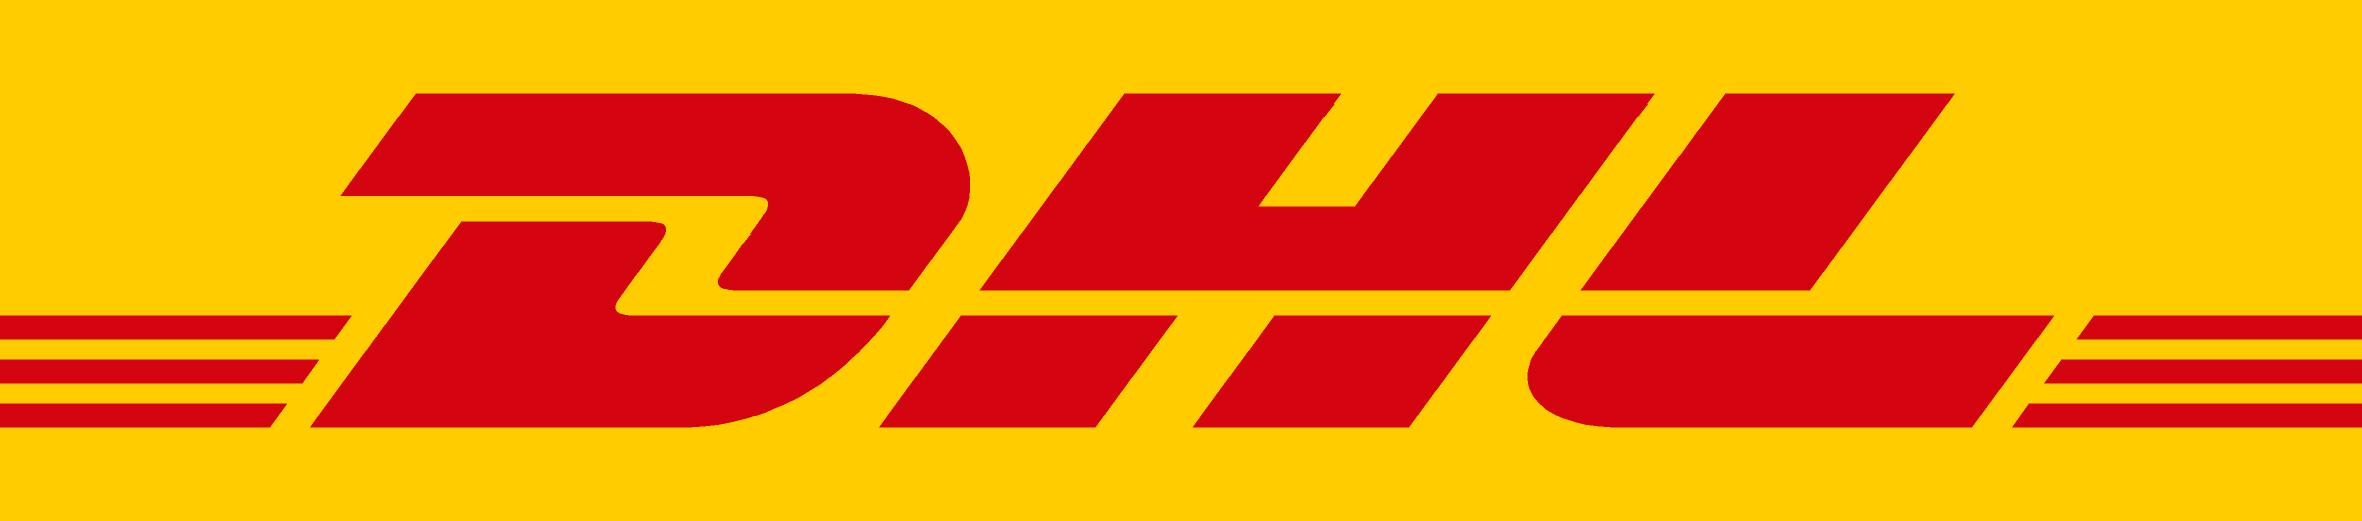 DHL Supply Chain Company Logo